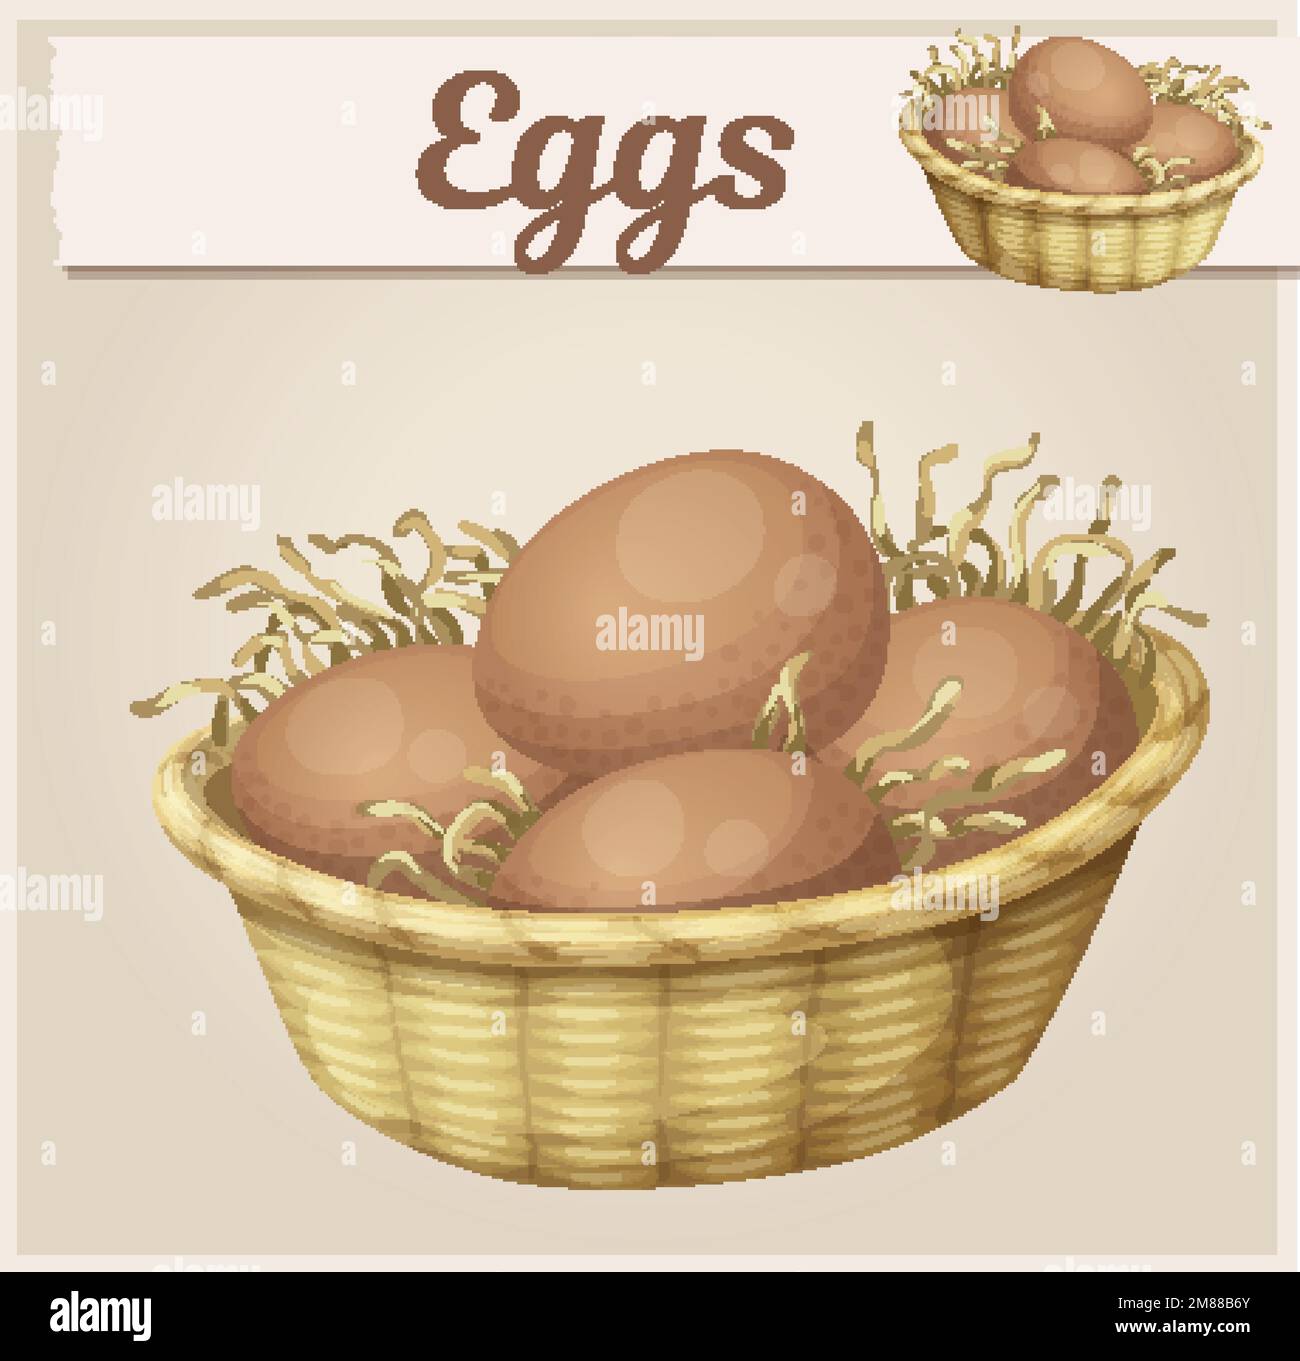 Chicken eggs in basket icon Stock Vector